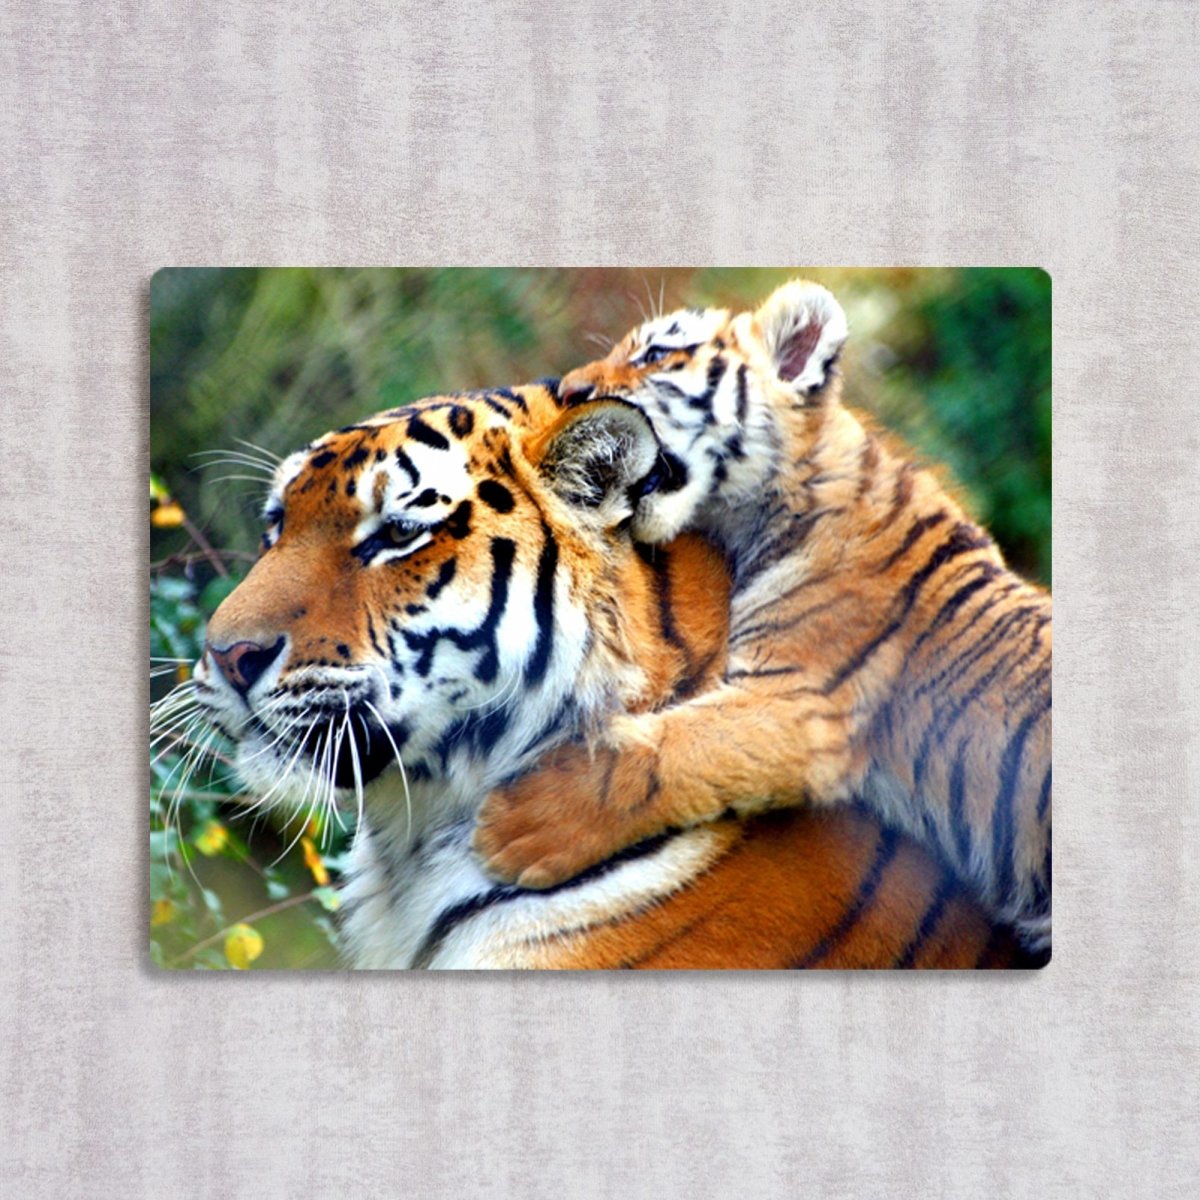 Tiger Love - cmzart